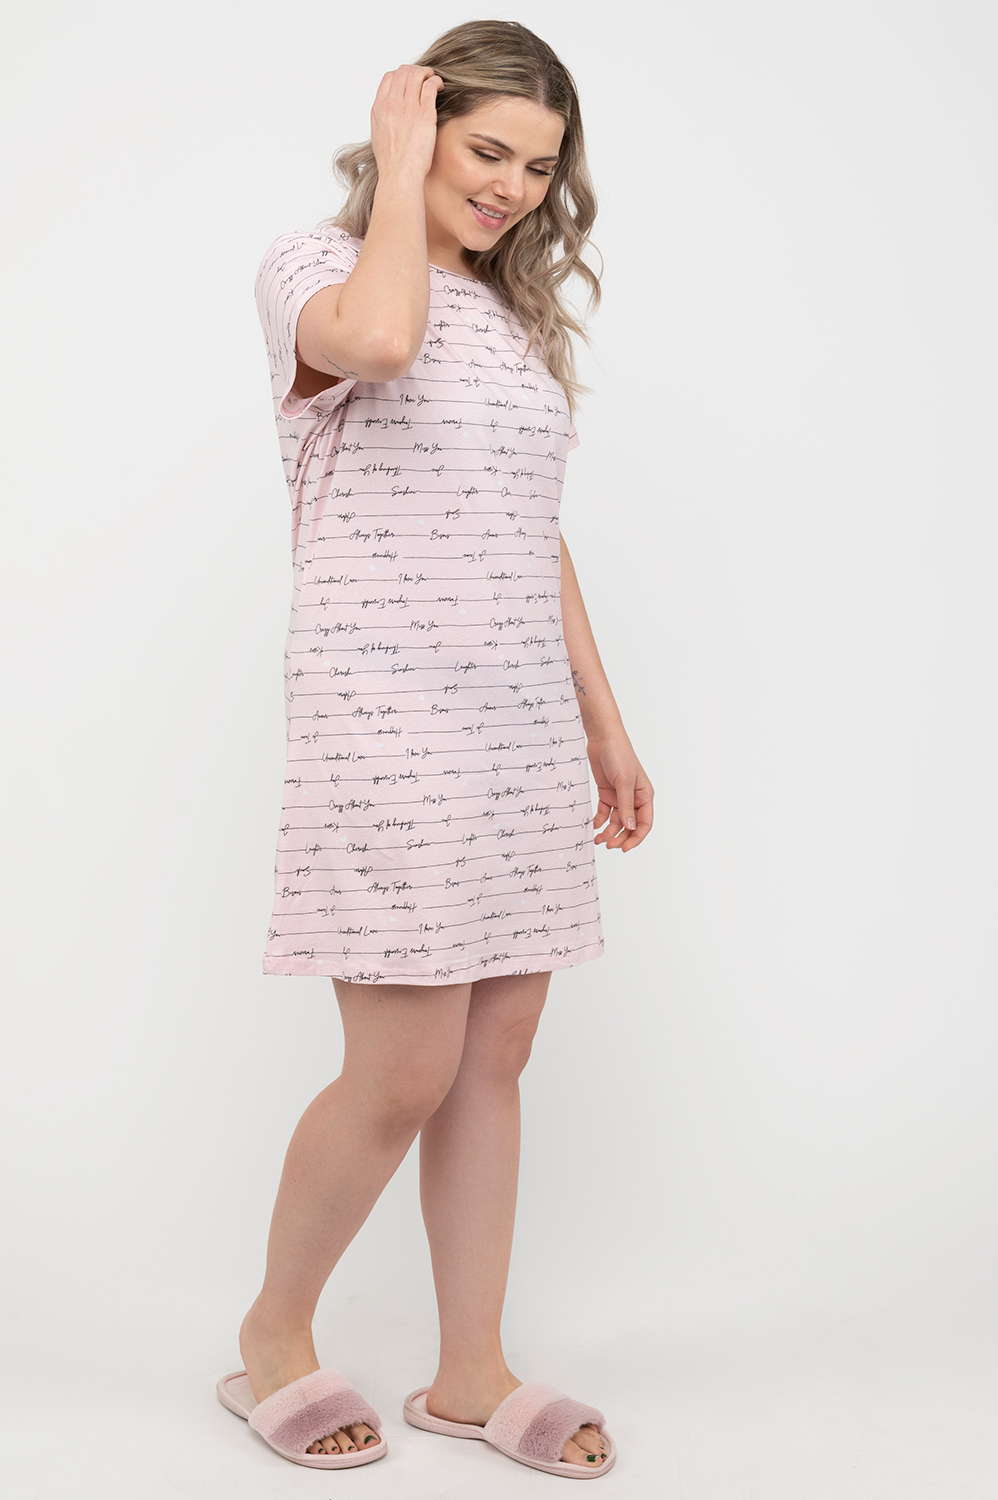 Charmour - Novelty printed short sleeve sleepshirt - Pink script - Plus Size